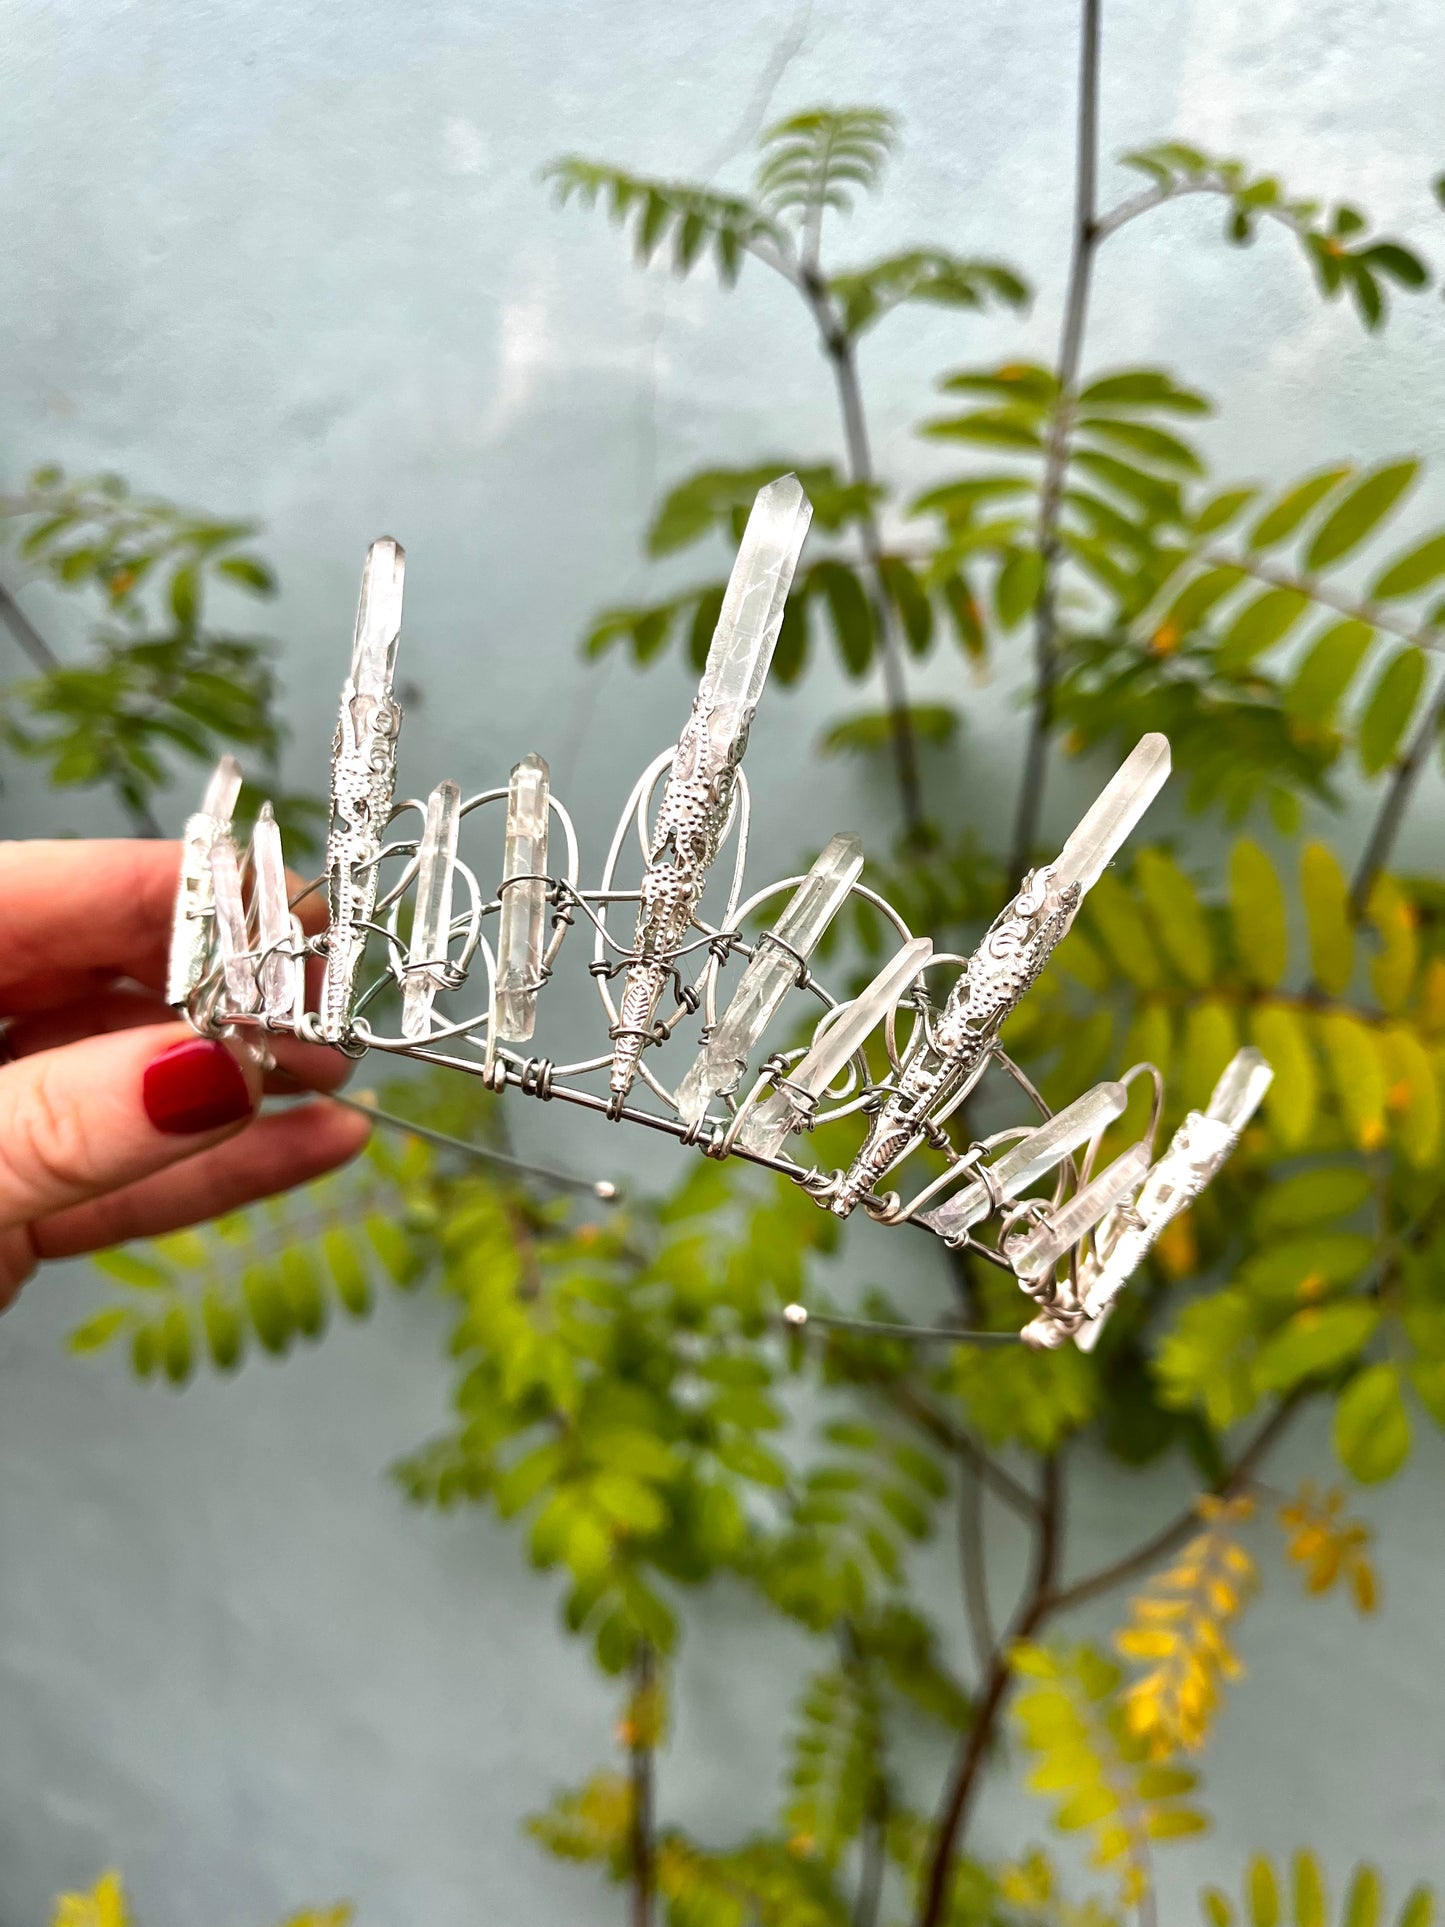 The IANTHE Crystal Art Nouveau Crown